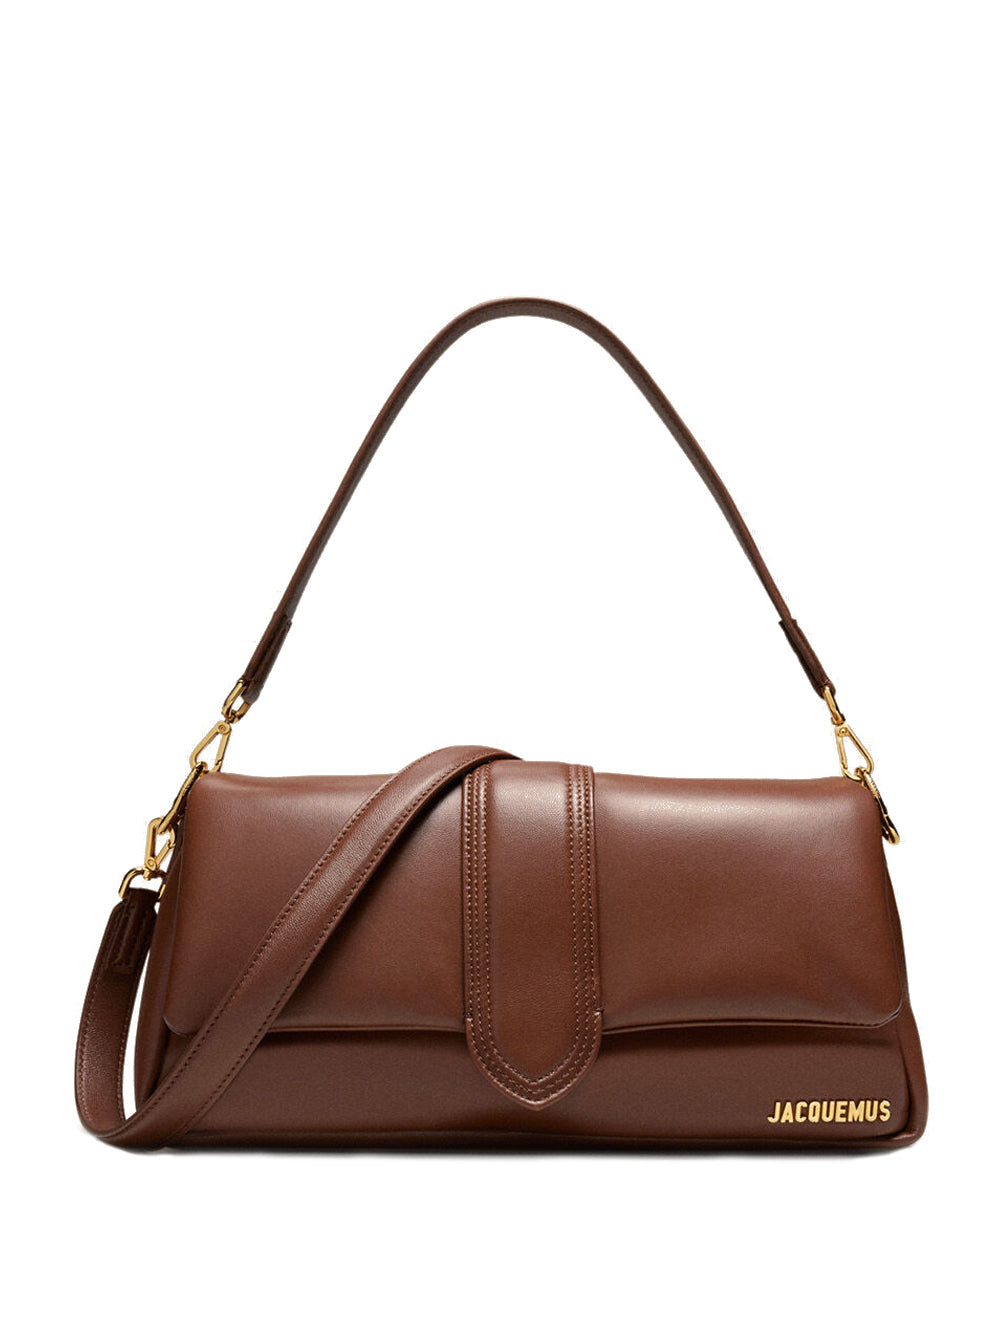 jacquemus brown bag